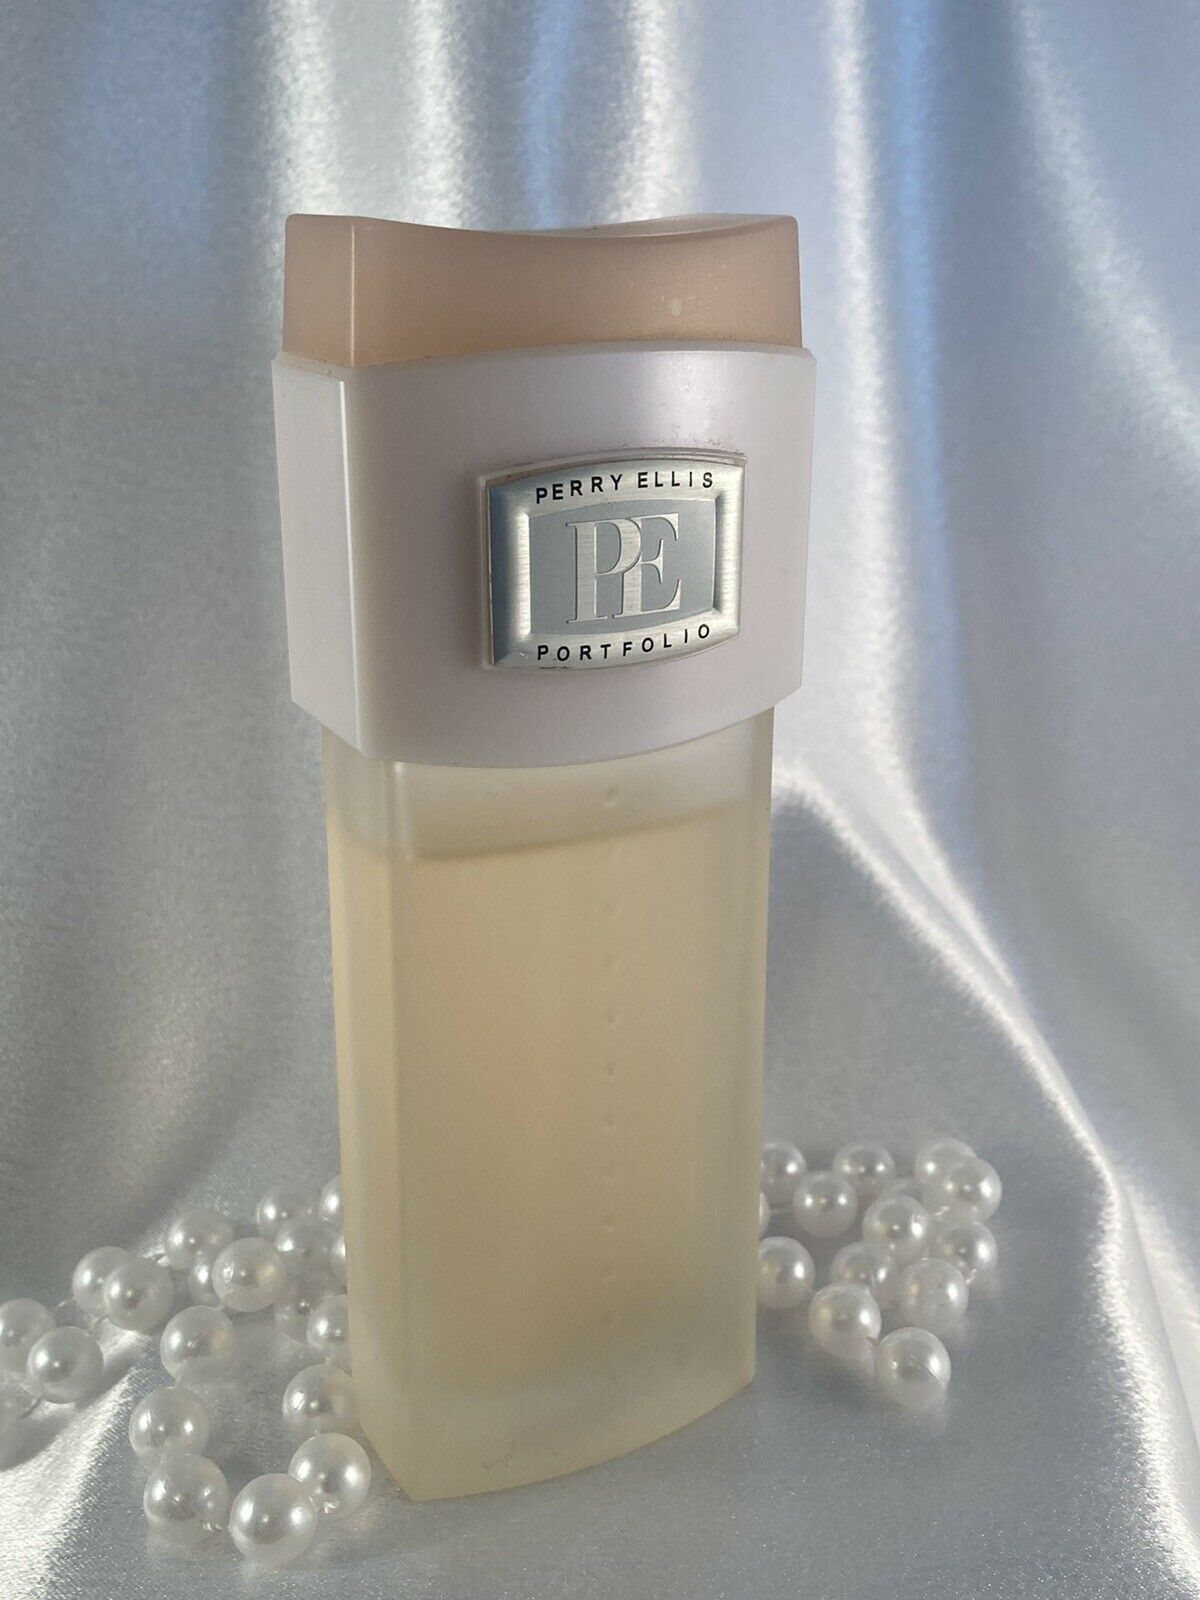 Parlux Fragrances Perry Ellis ‘portfolio’ Eau De Parfum Spray. Almost Full.